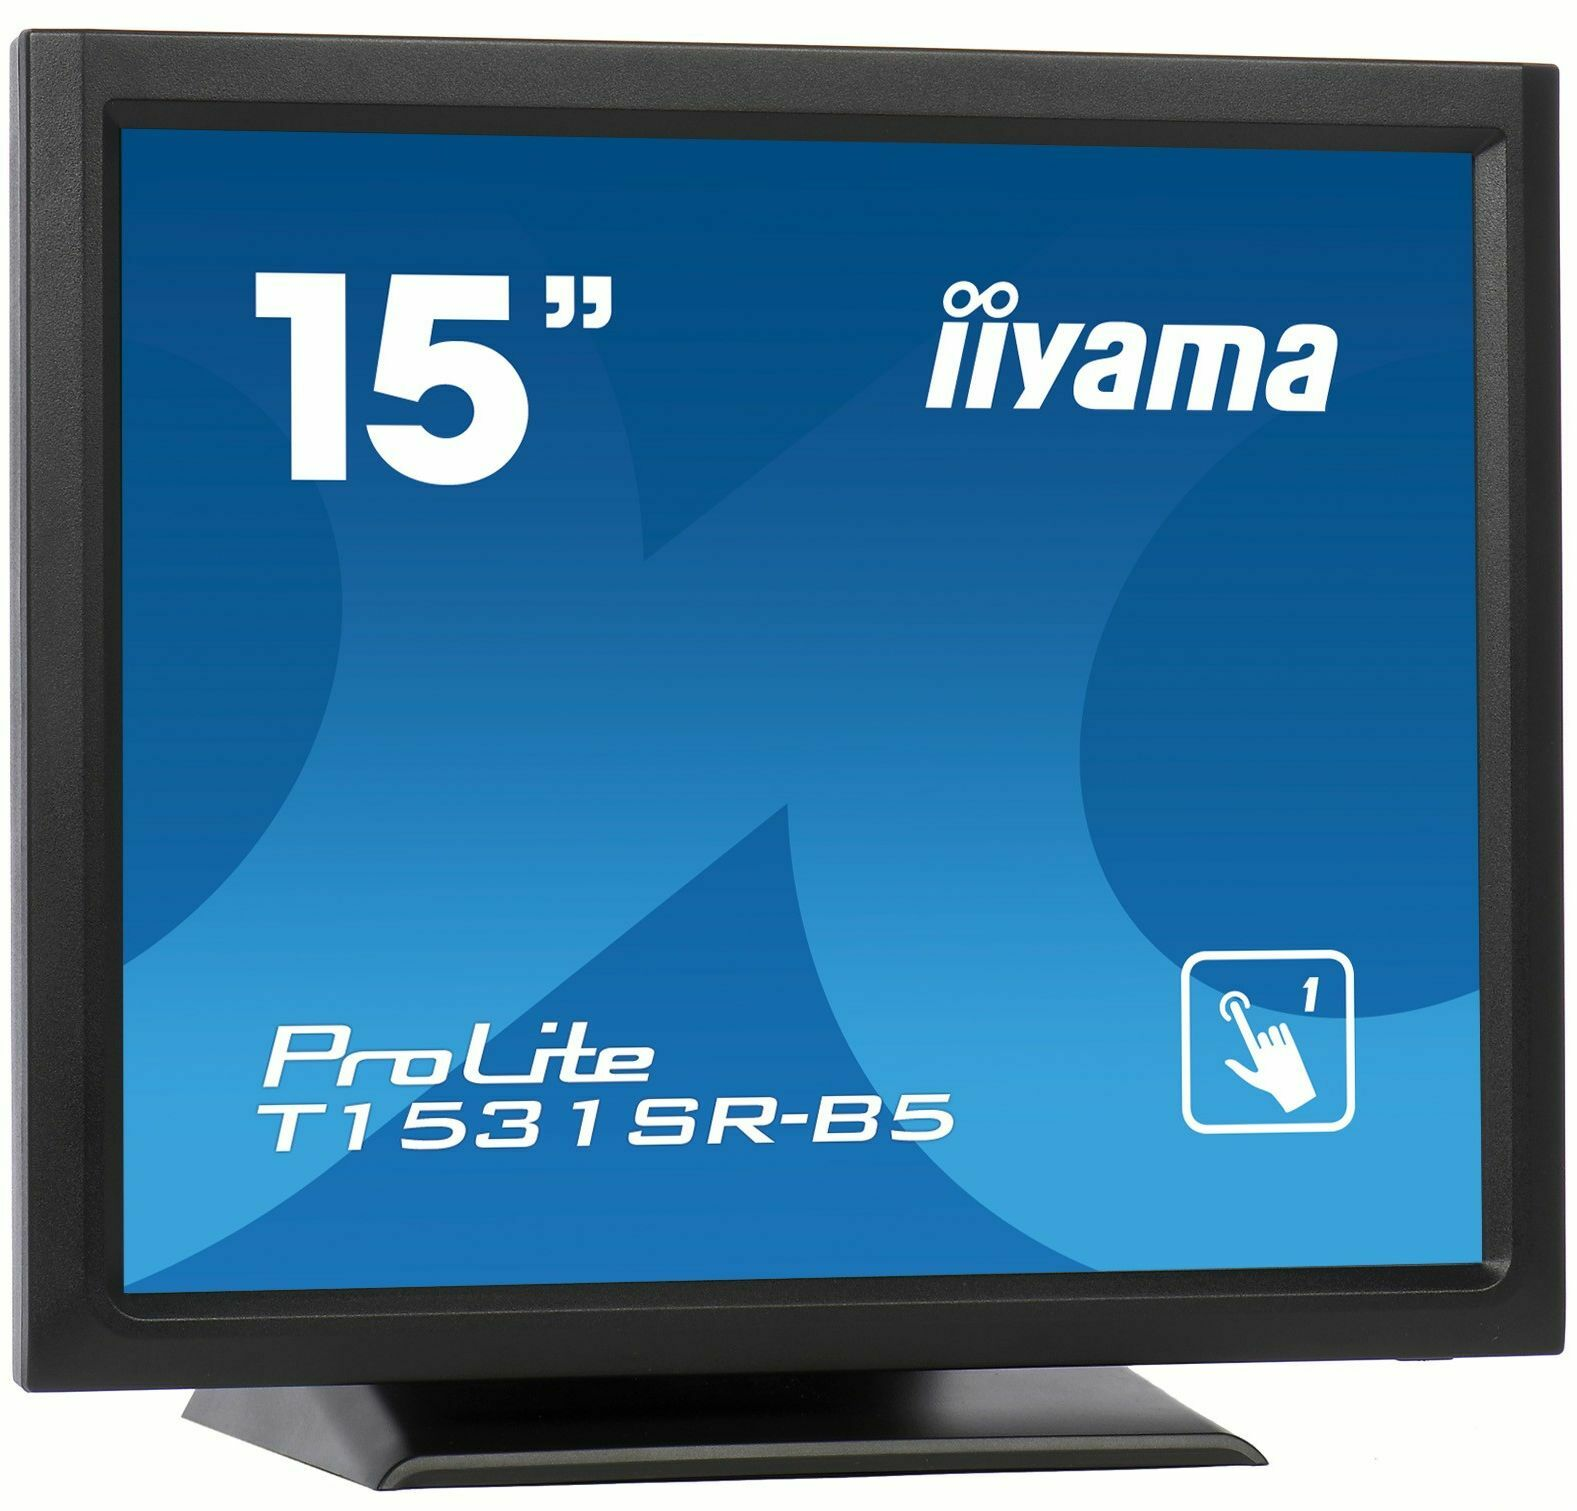 Iiyama T1531SR